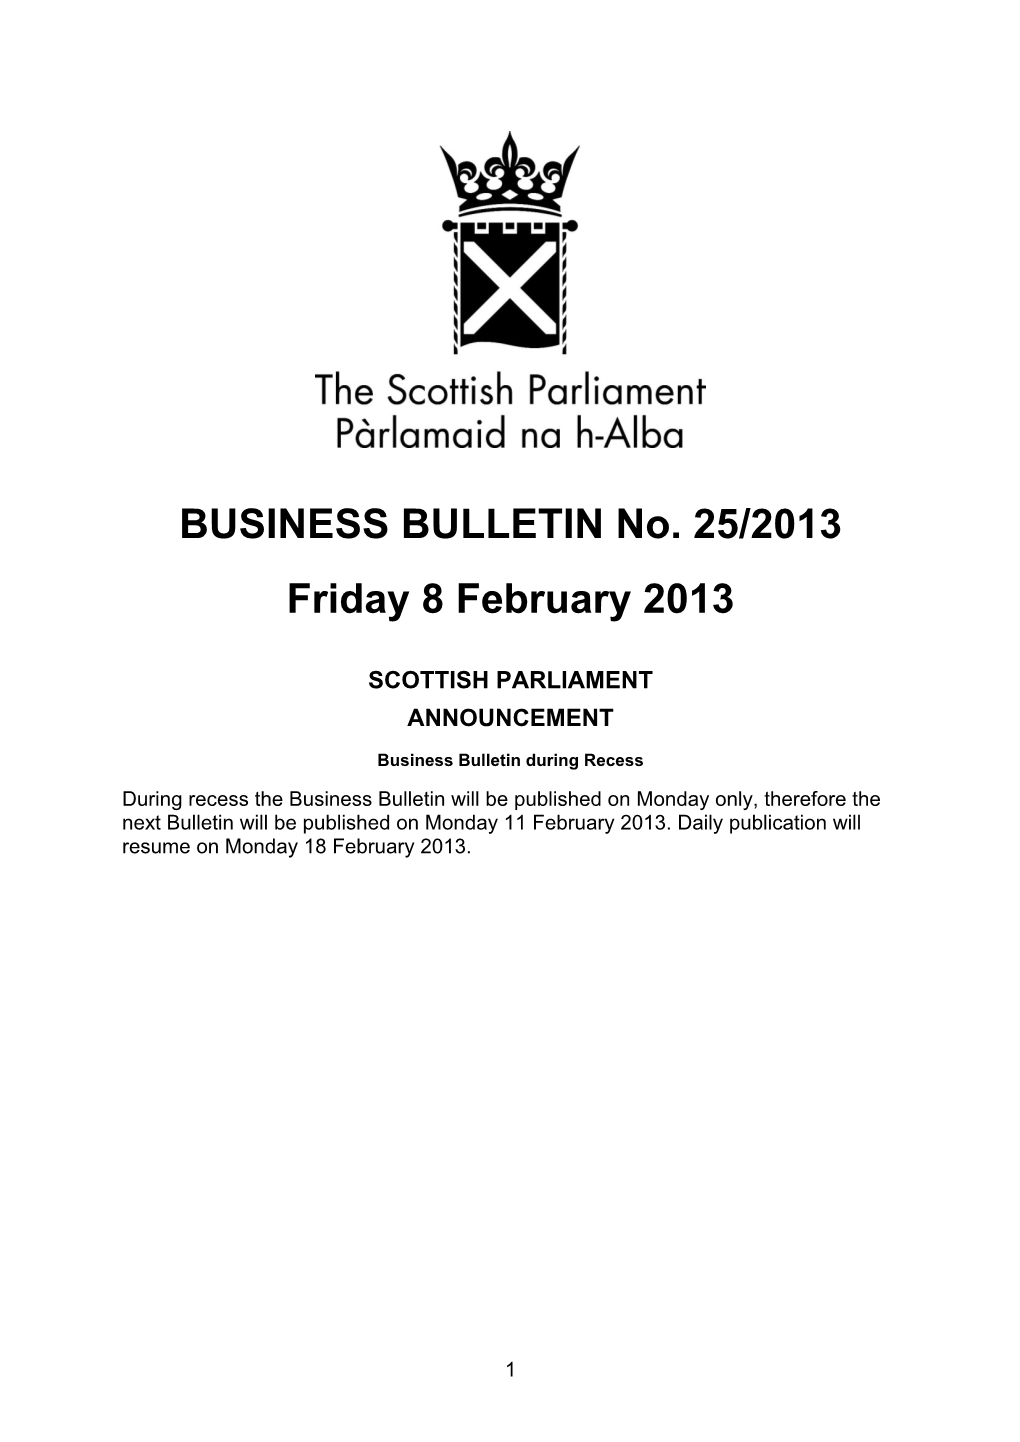 BUSINESS BULLETIN No. 25/2013 Friday 8 February 2013